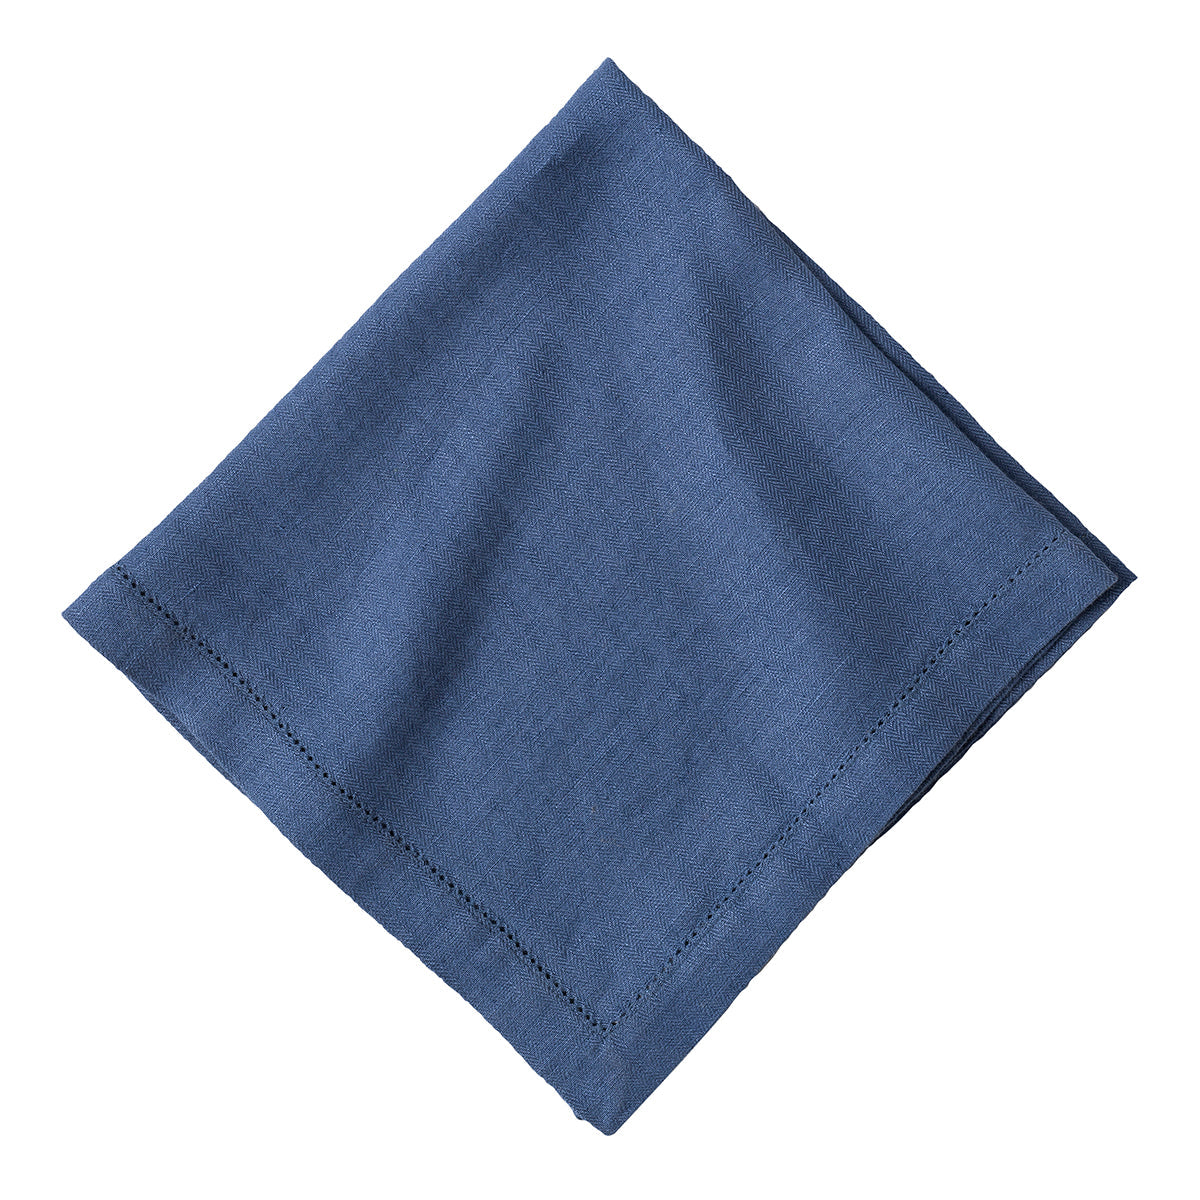 Heirloom Linen Napkin Set-4 - Delft Blue-1st